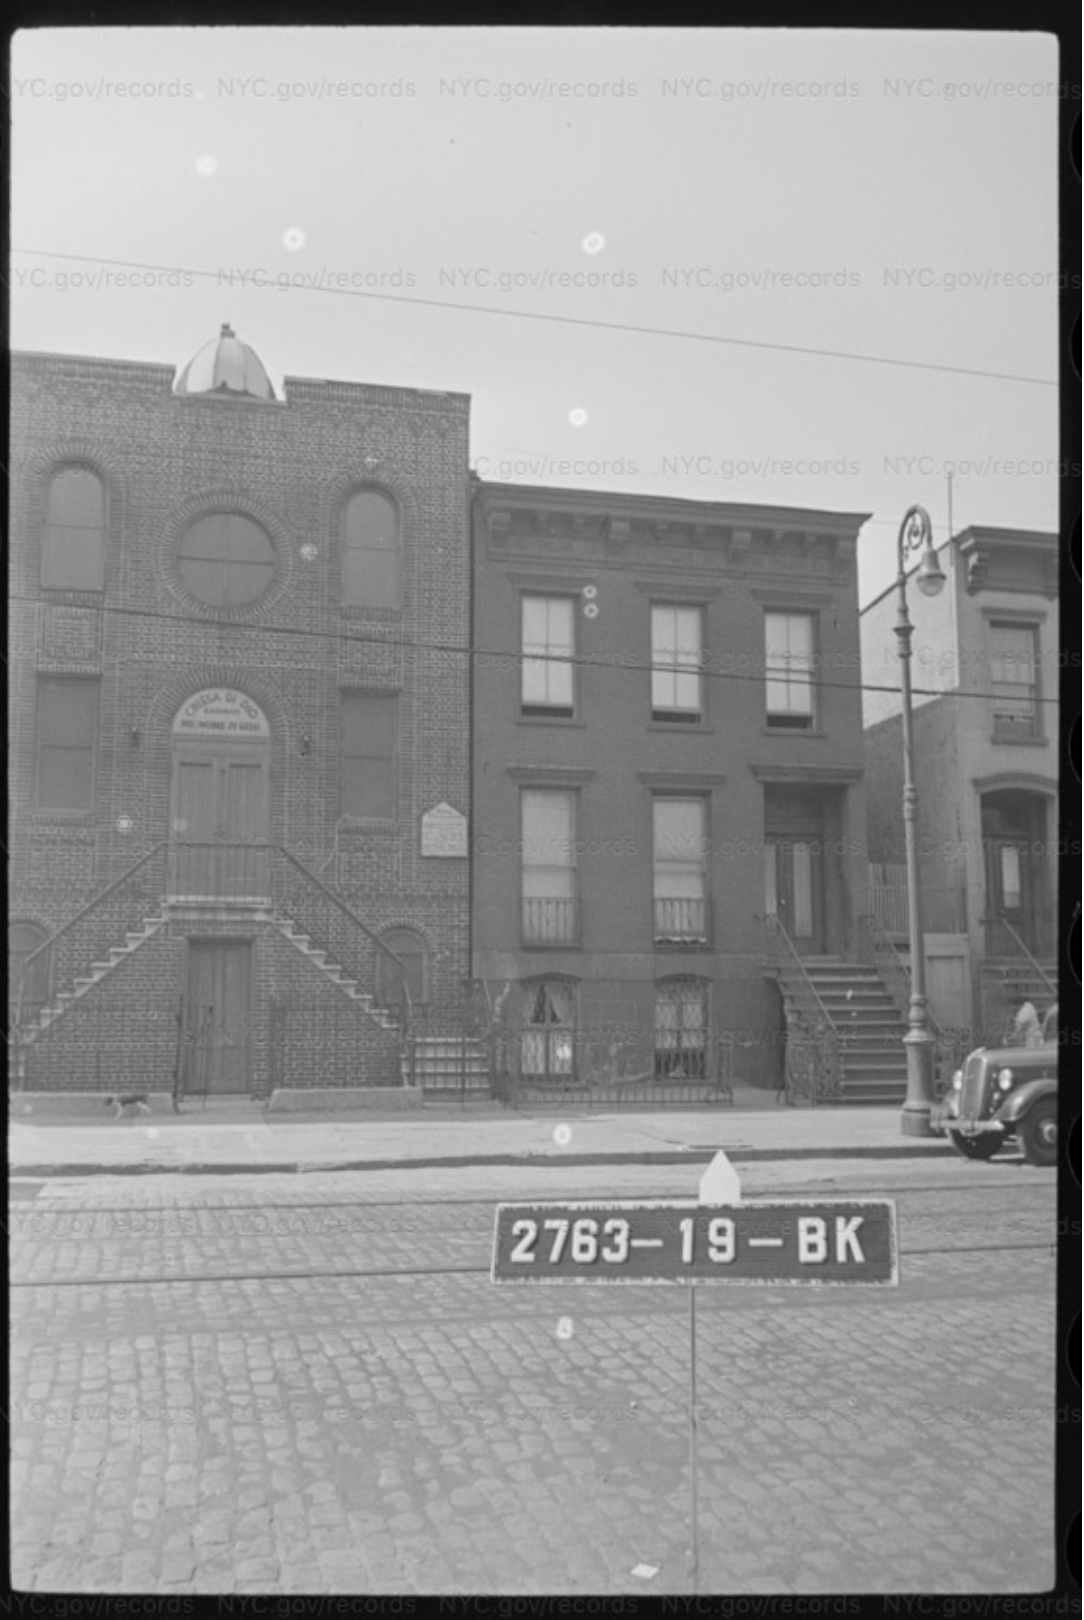 672 Metropolitan Avenue 1940 tax photo